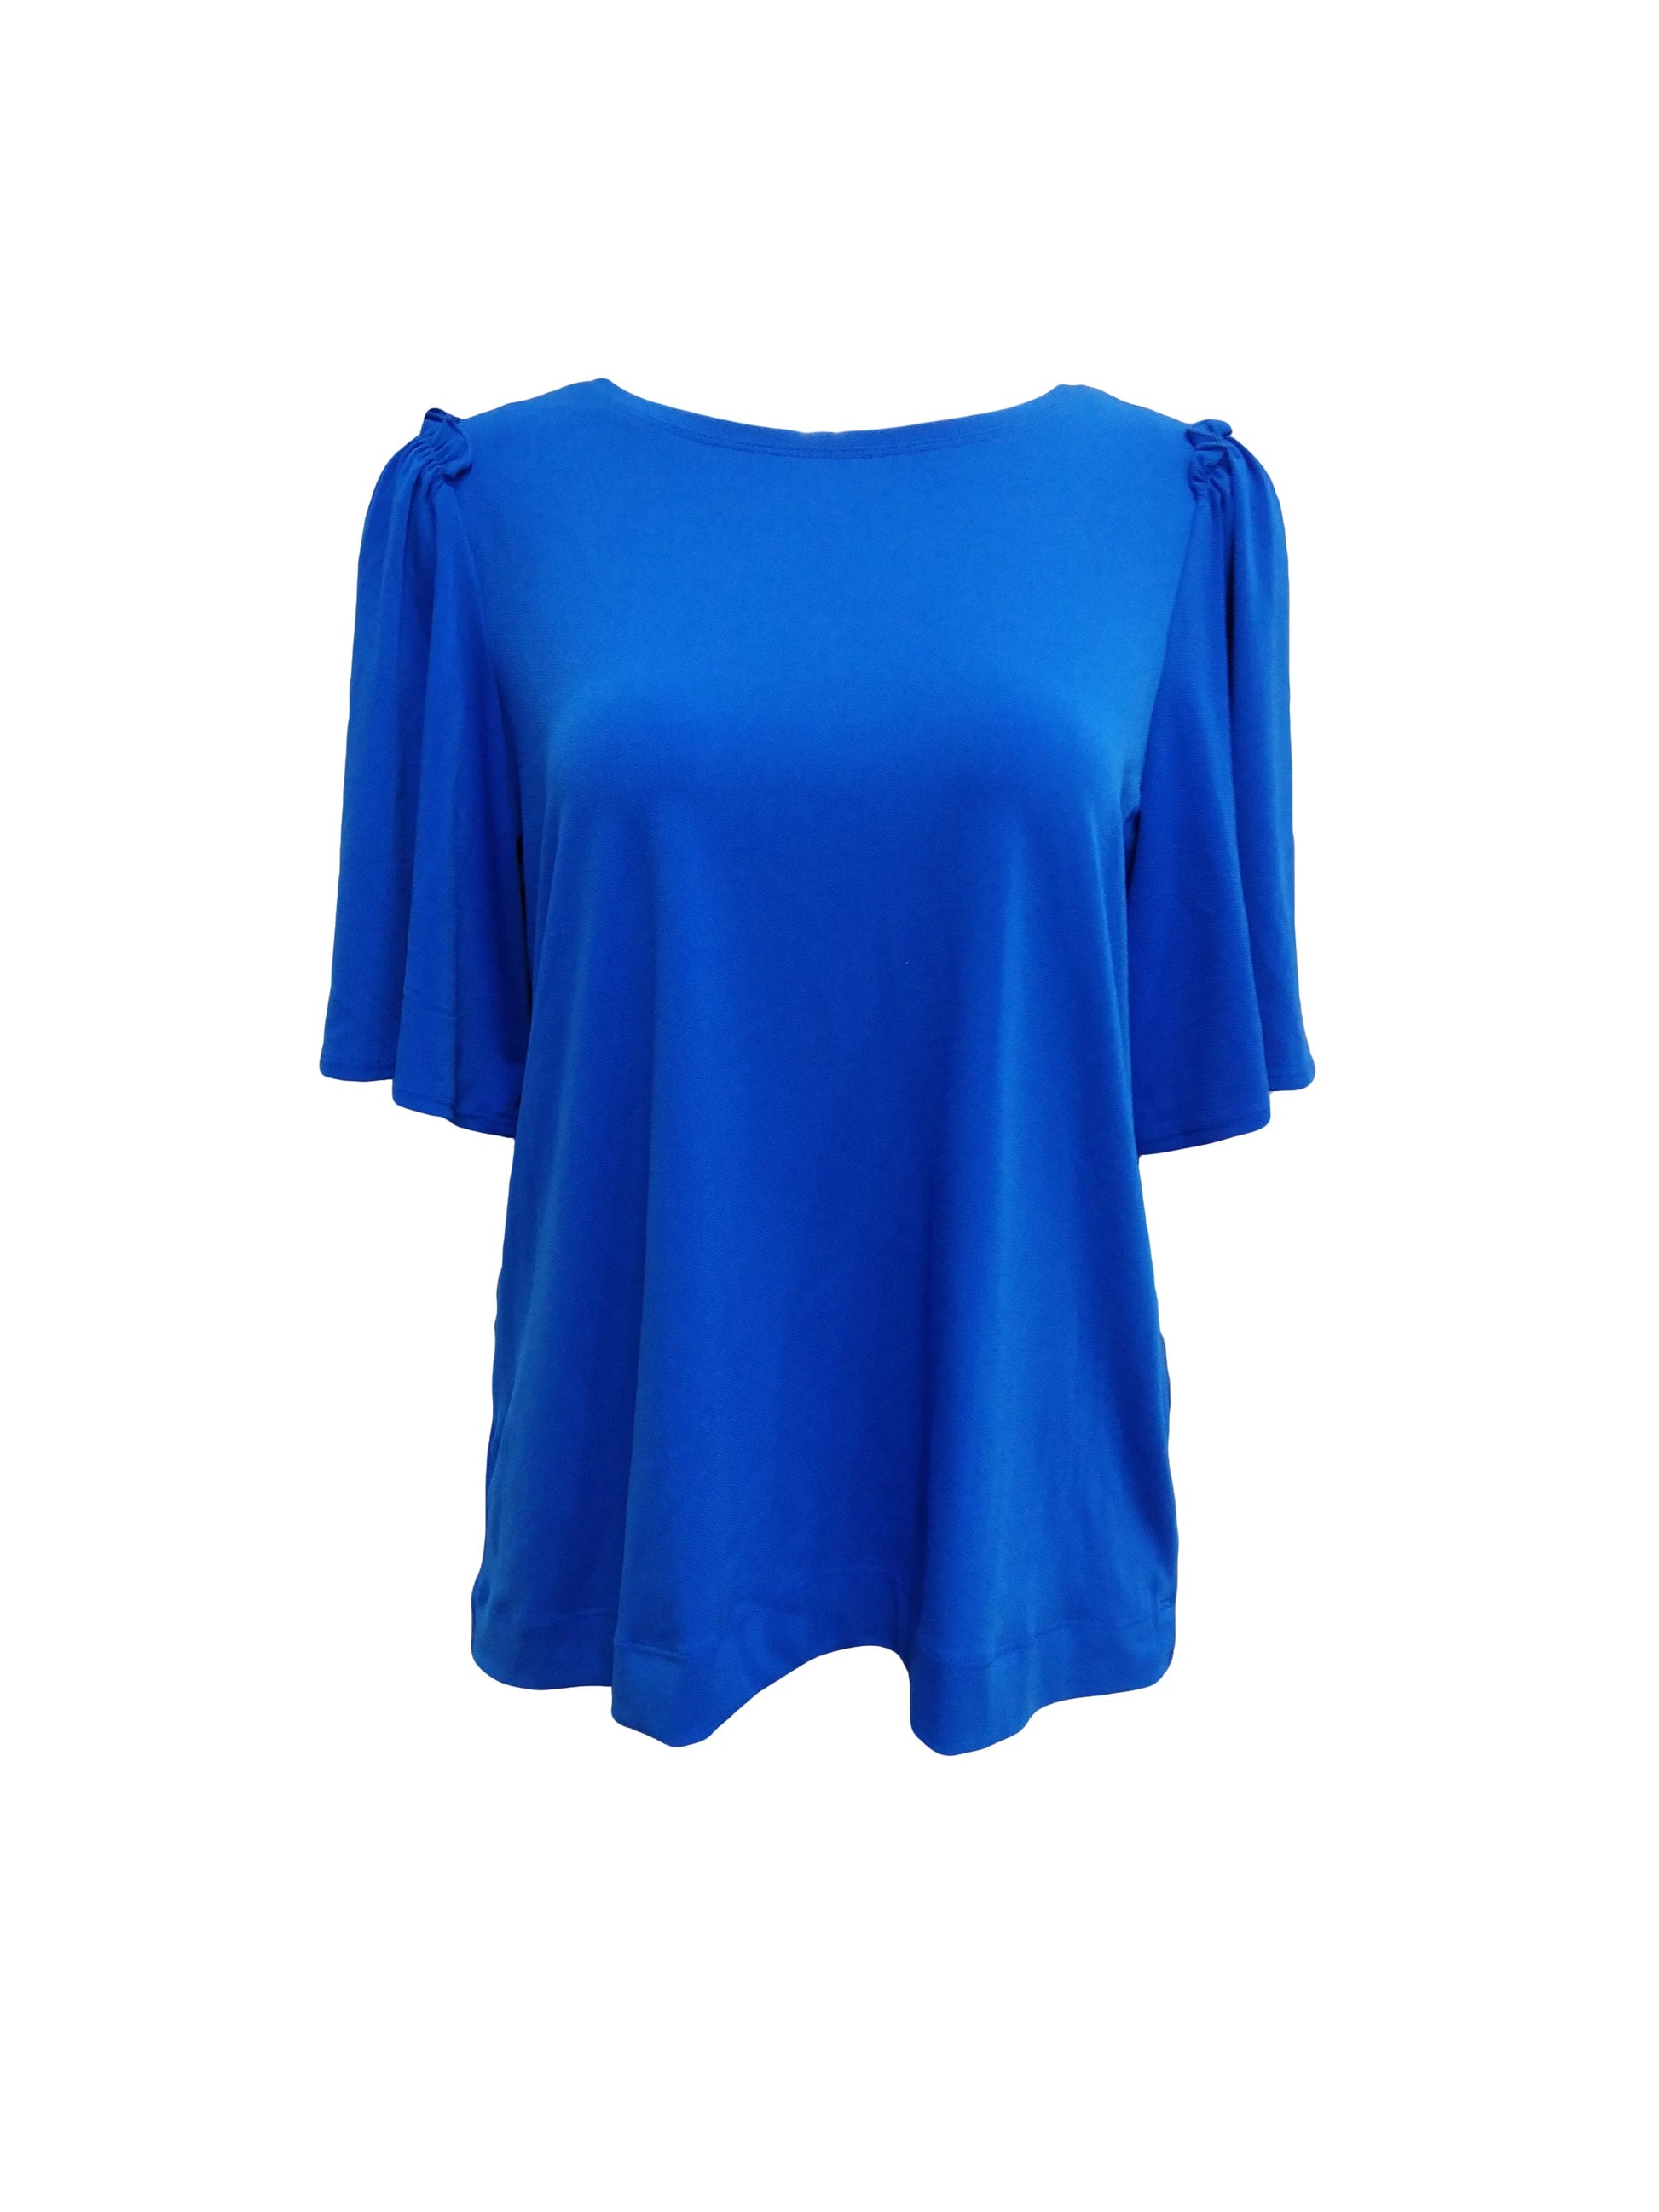 Worthington Womens Tops Madium / Royal Blue Short Sleeve Top